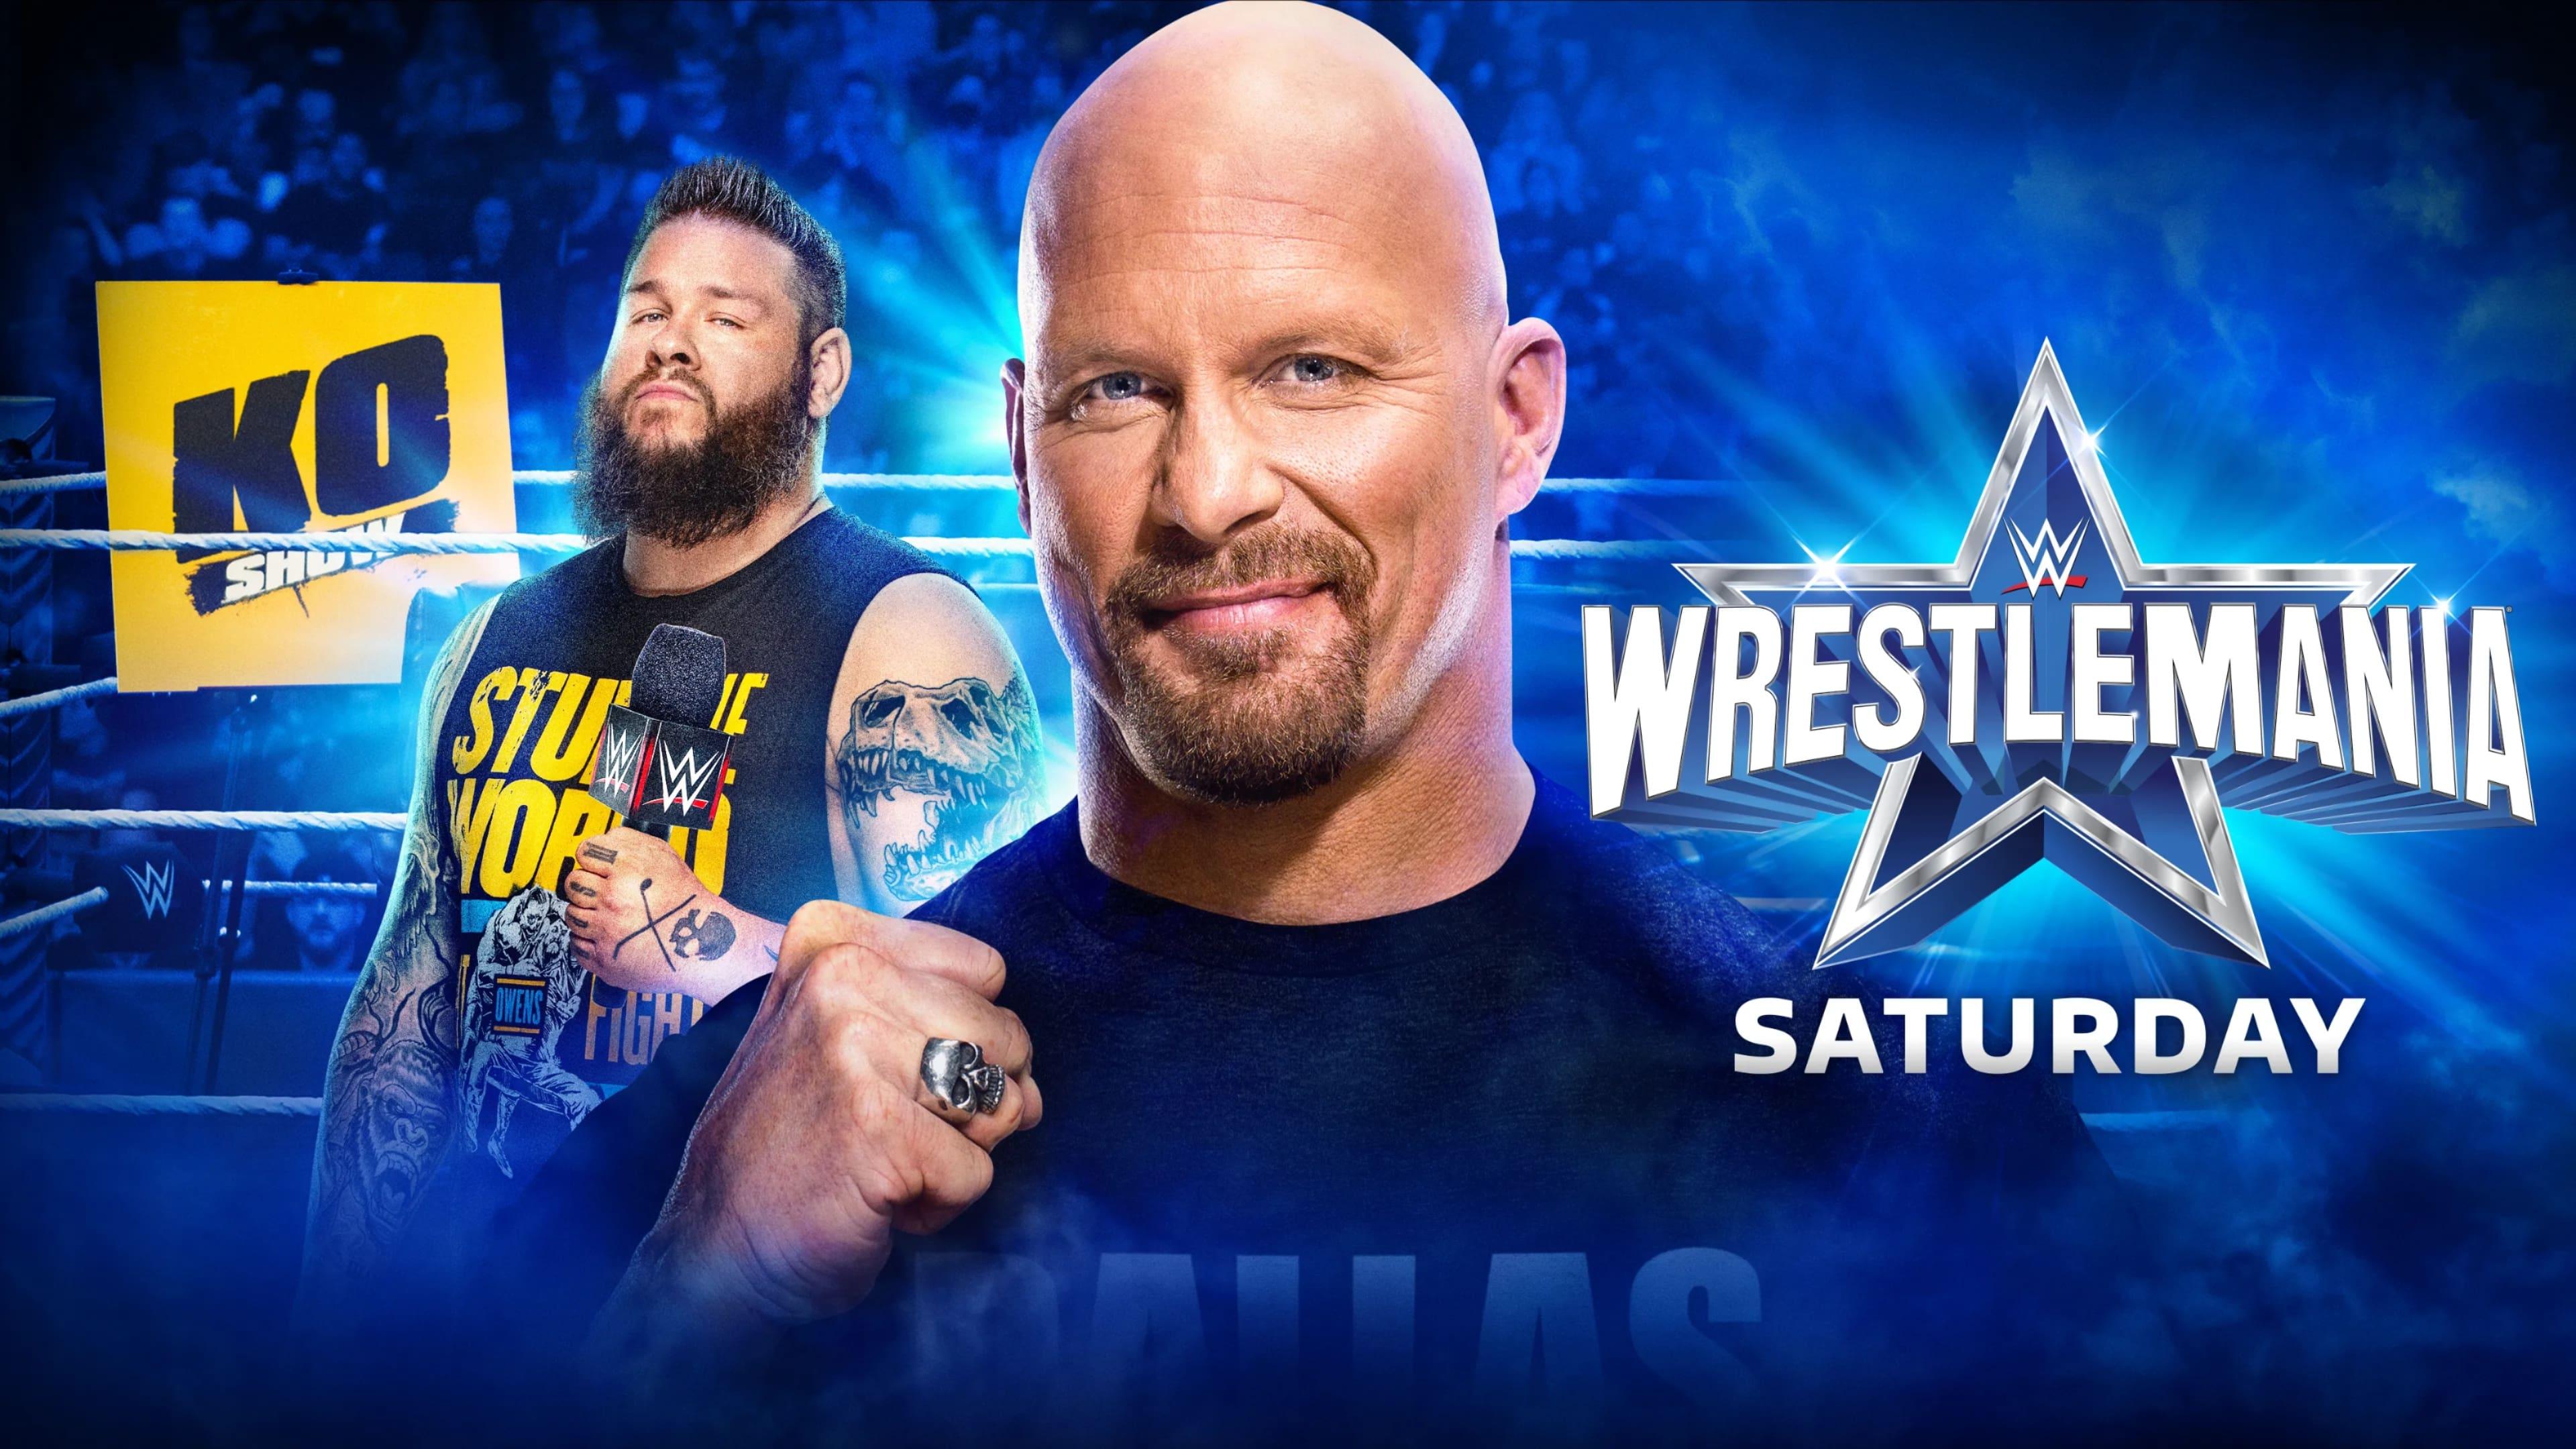 WWE WrestleMania 38 - Saturday backdrop